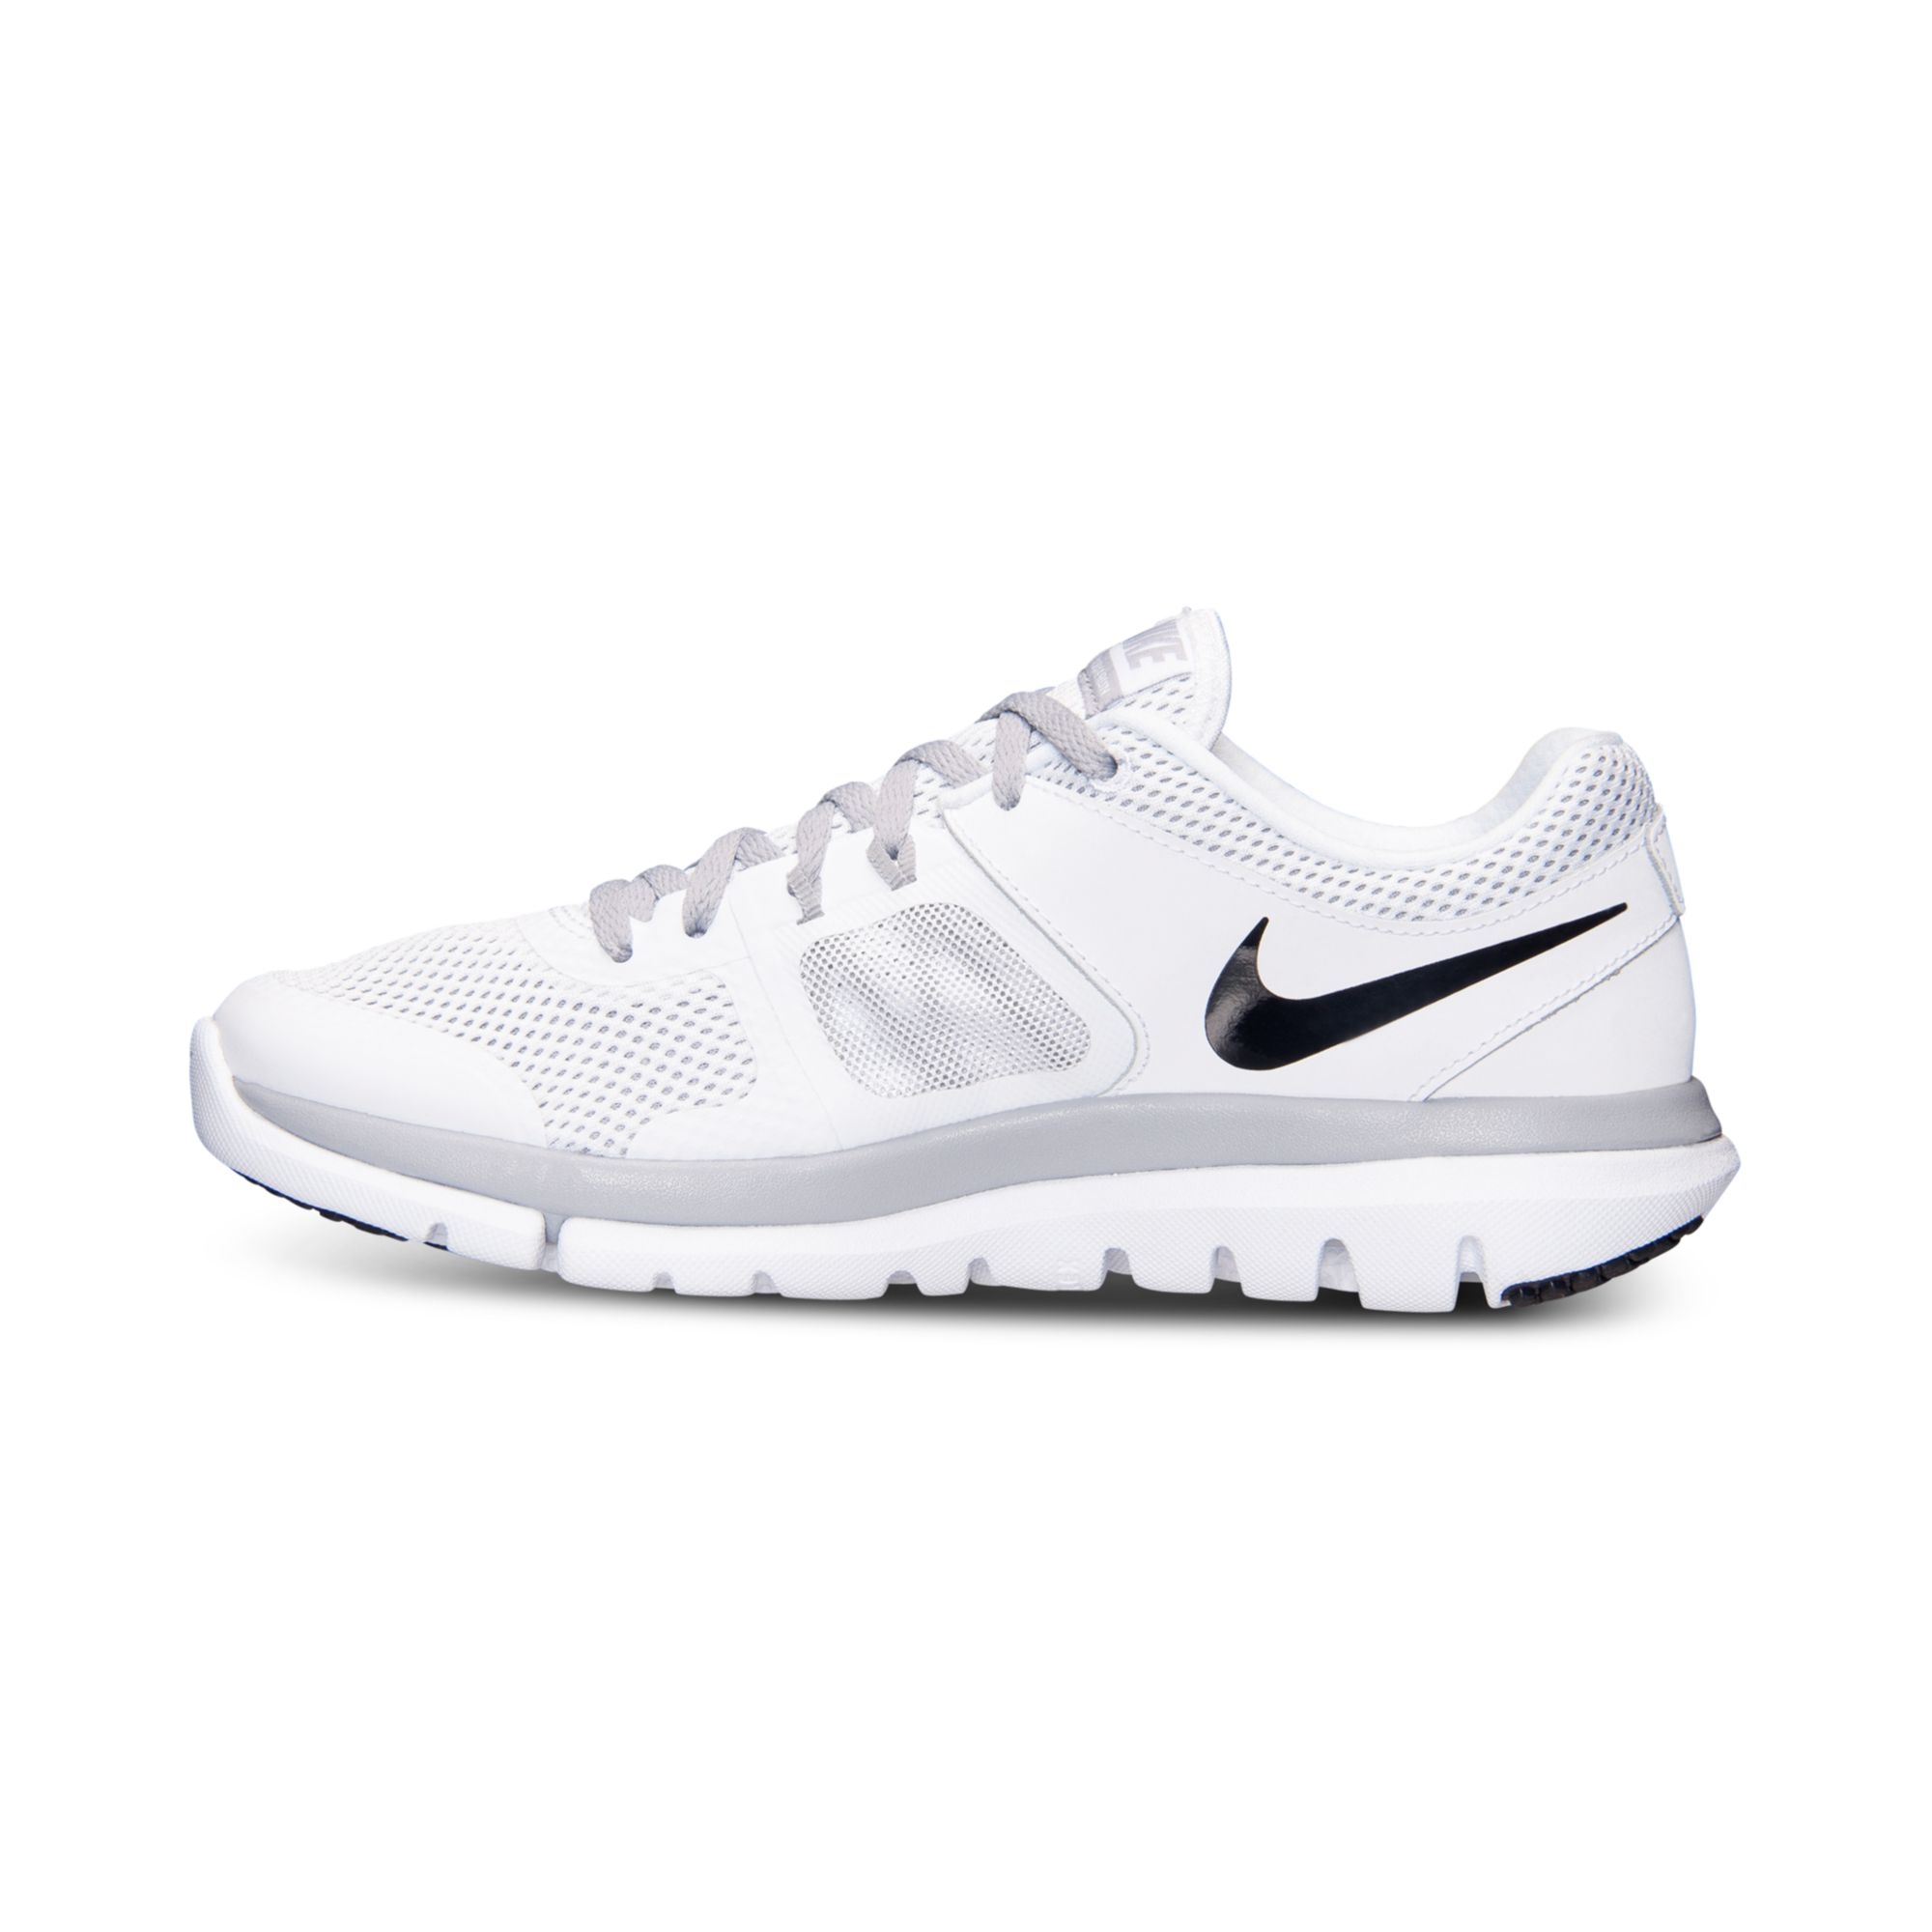 Nike Women'S Flex Run 2014 Running Sneakers From Finish Line in White ...